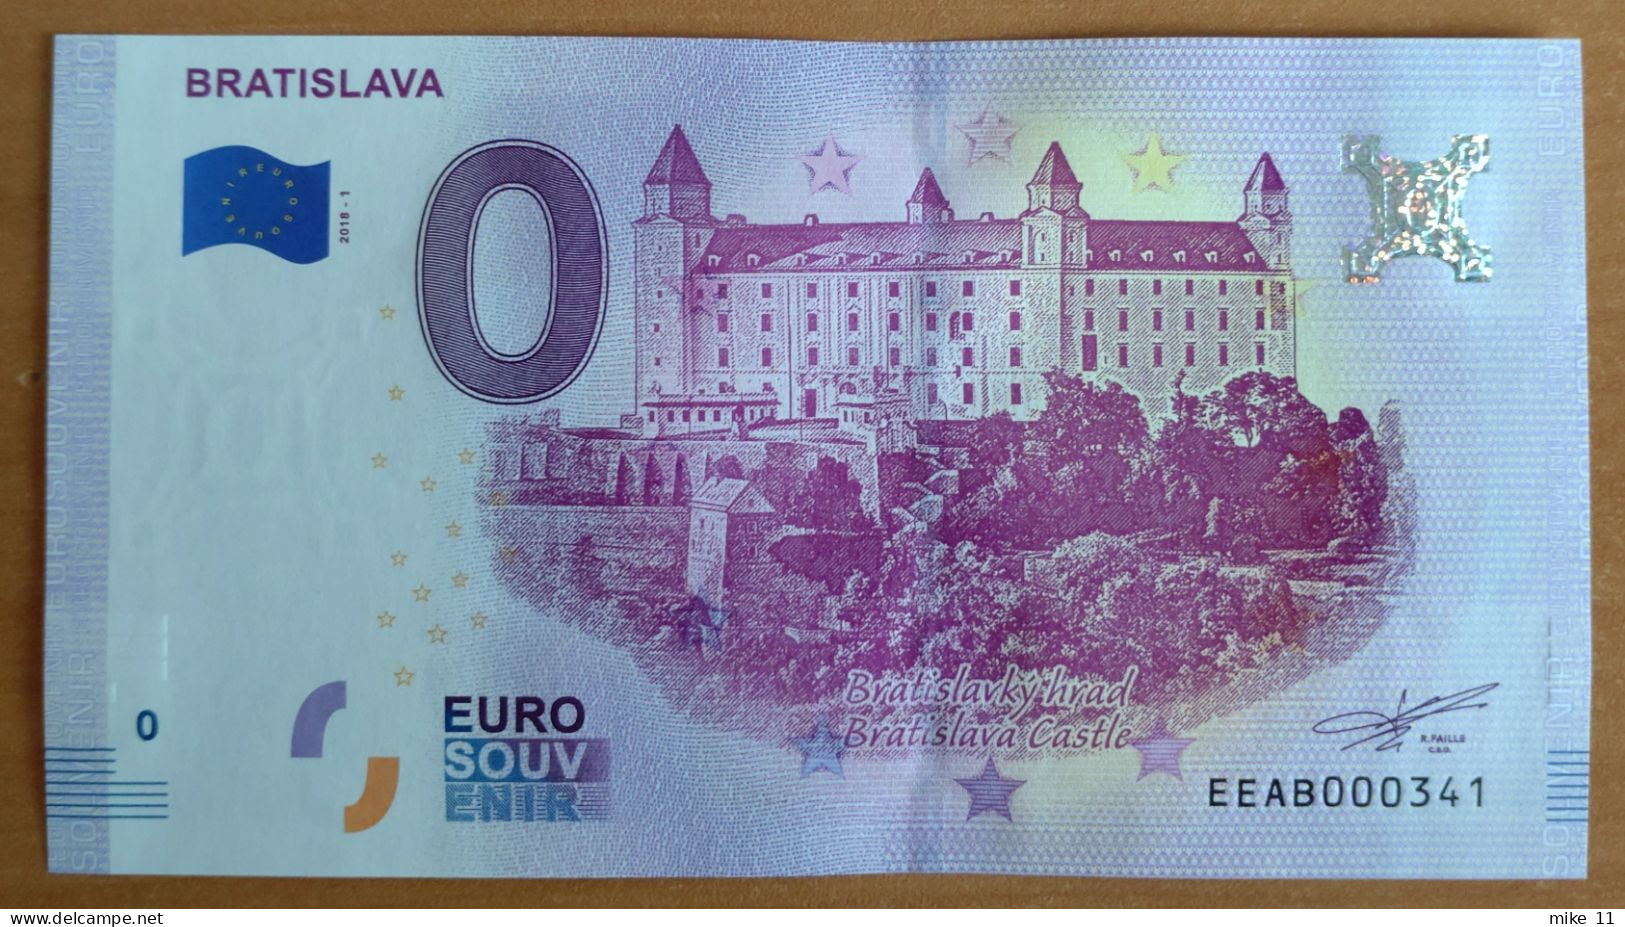 0 Euro Souvenir BRATISLAVA Slovakia EEAB 2018-1 Nr. 341 - Sonstige – Europa